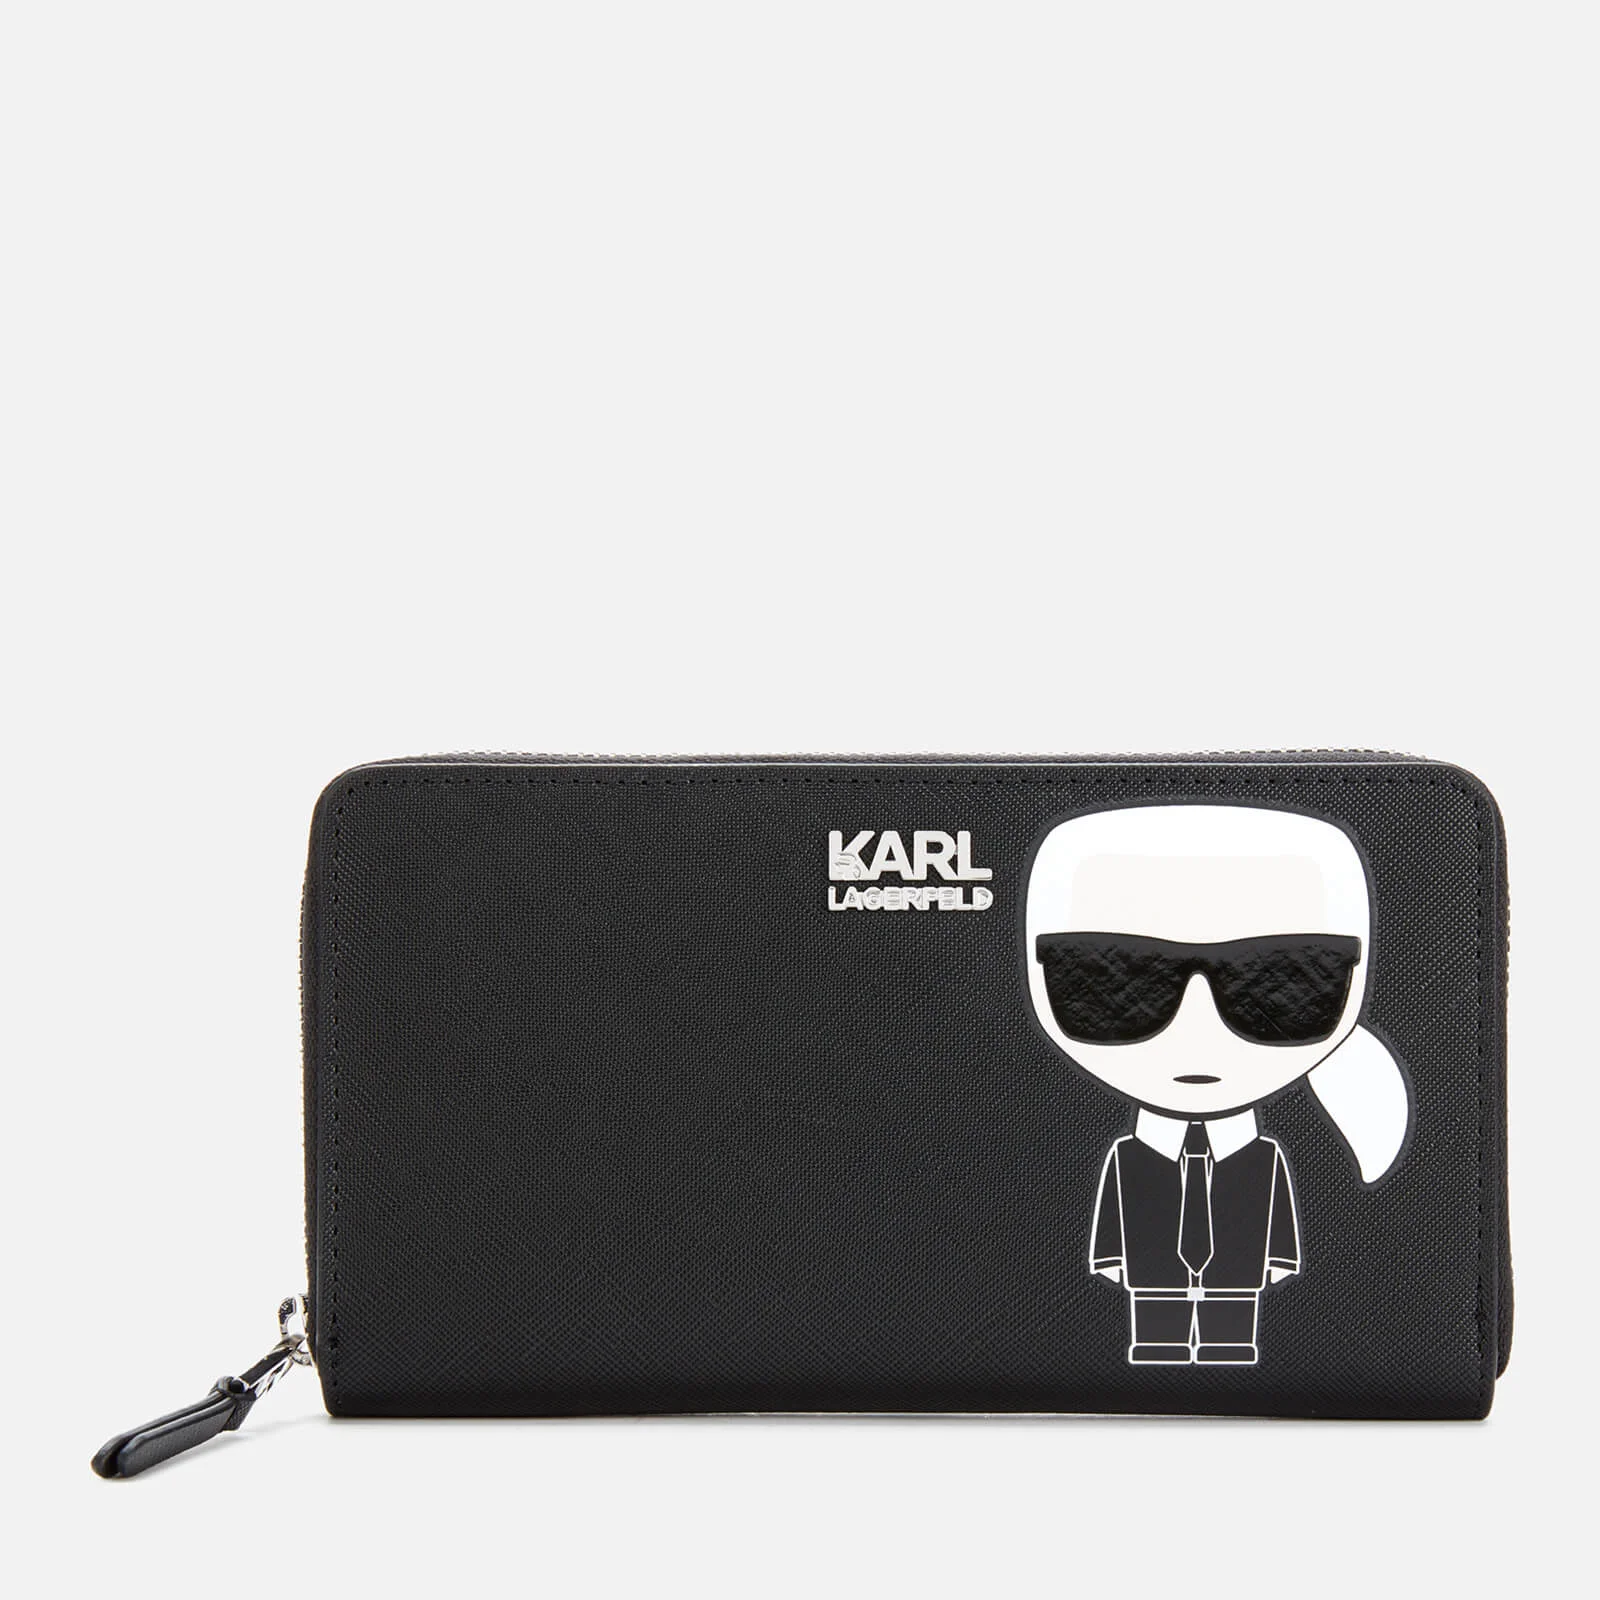 Karl Lagerfeld Women's K/Ikonik Zip Wallet - Black Image 1